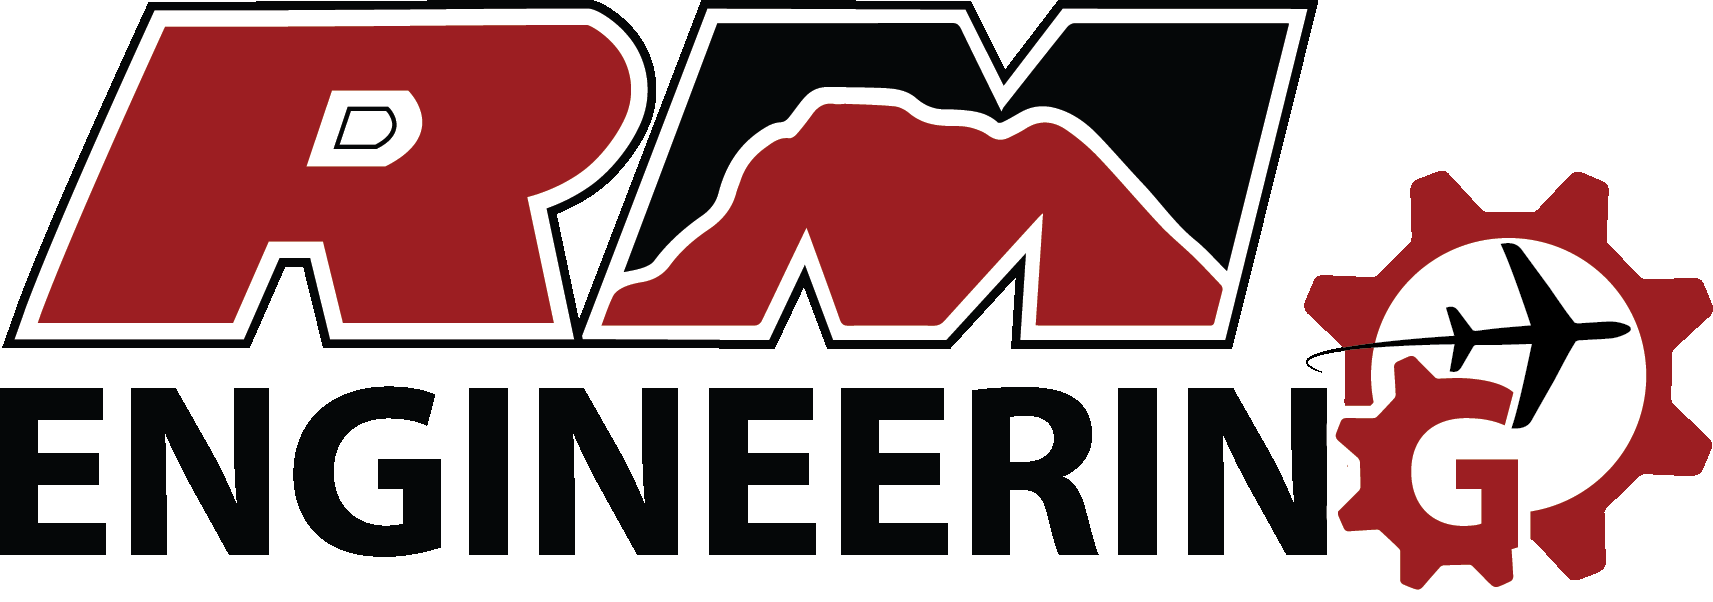 Red Mountain High School Logo - Red Mountain High School » Engineering